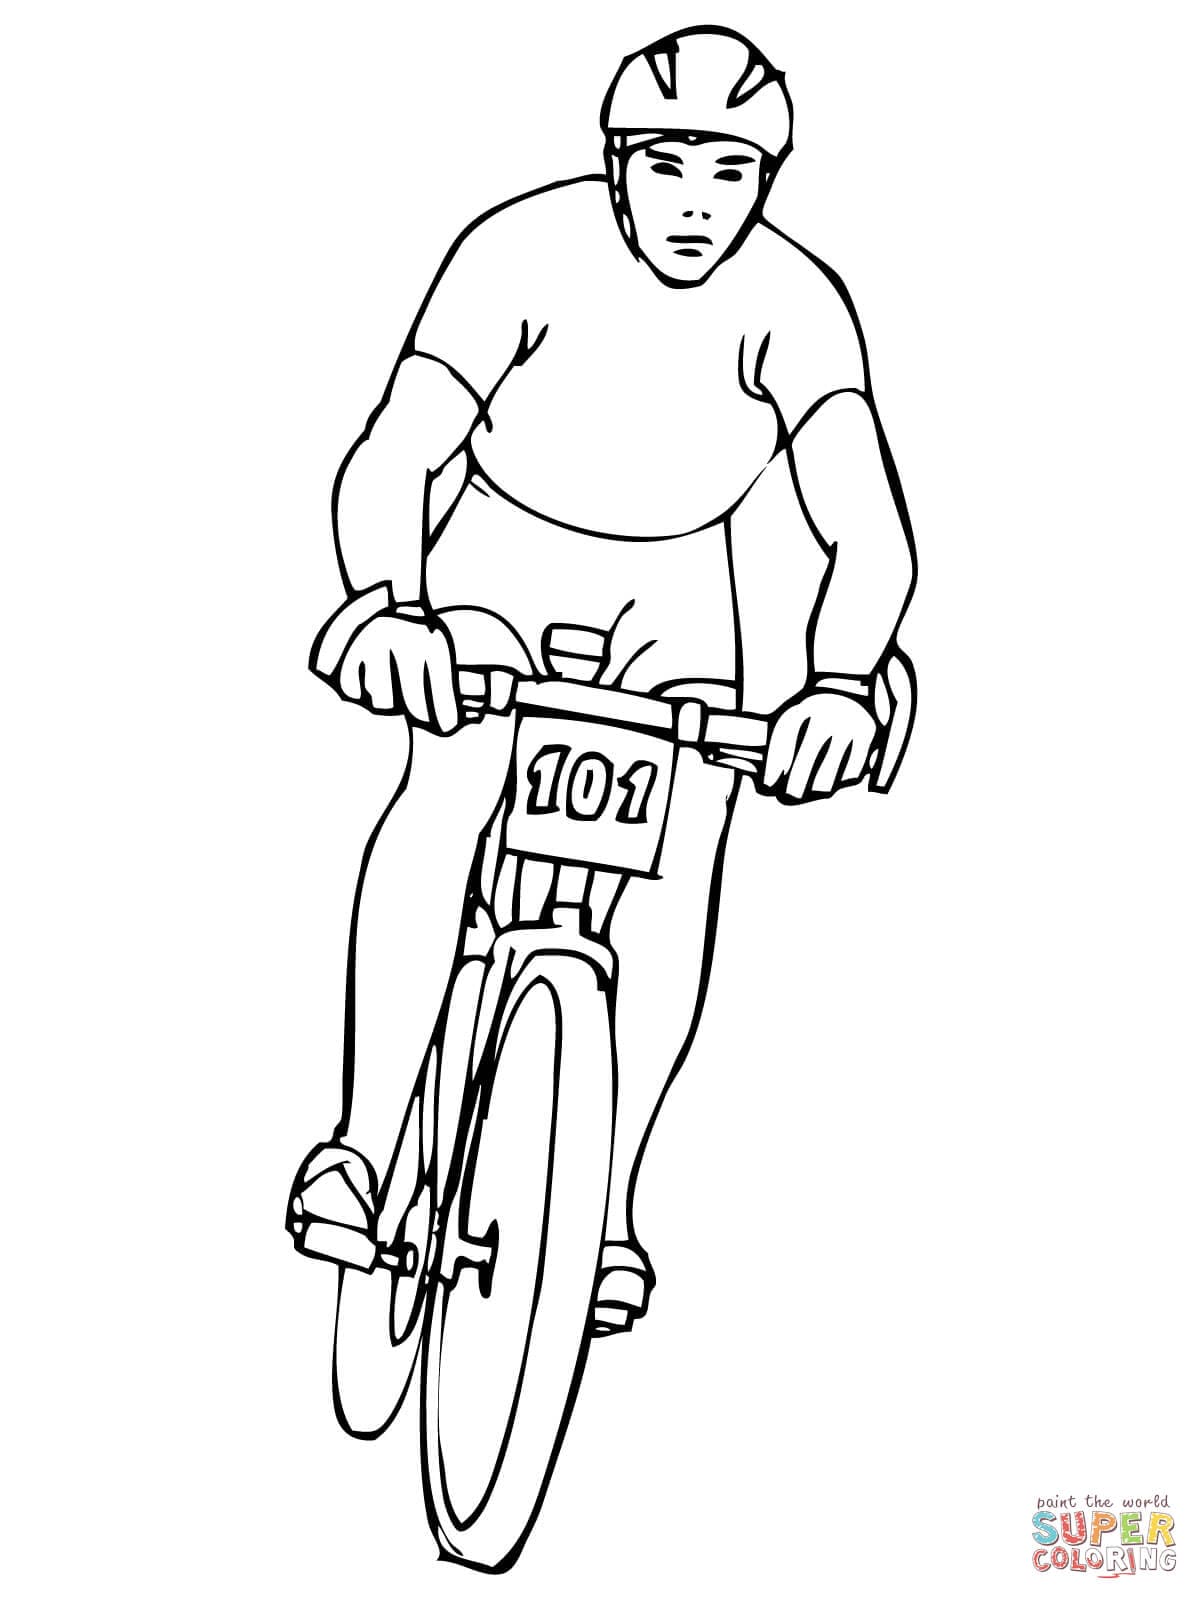 Riding Racing Bicycle Image